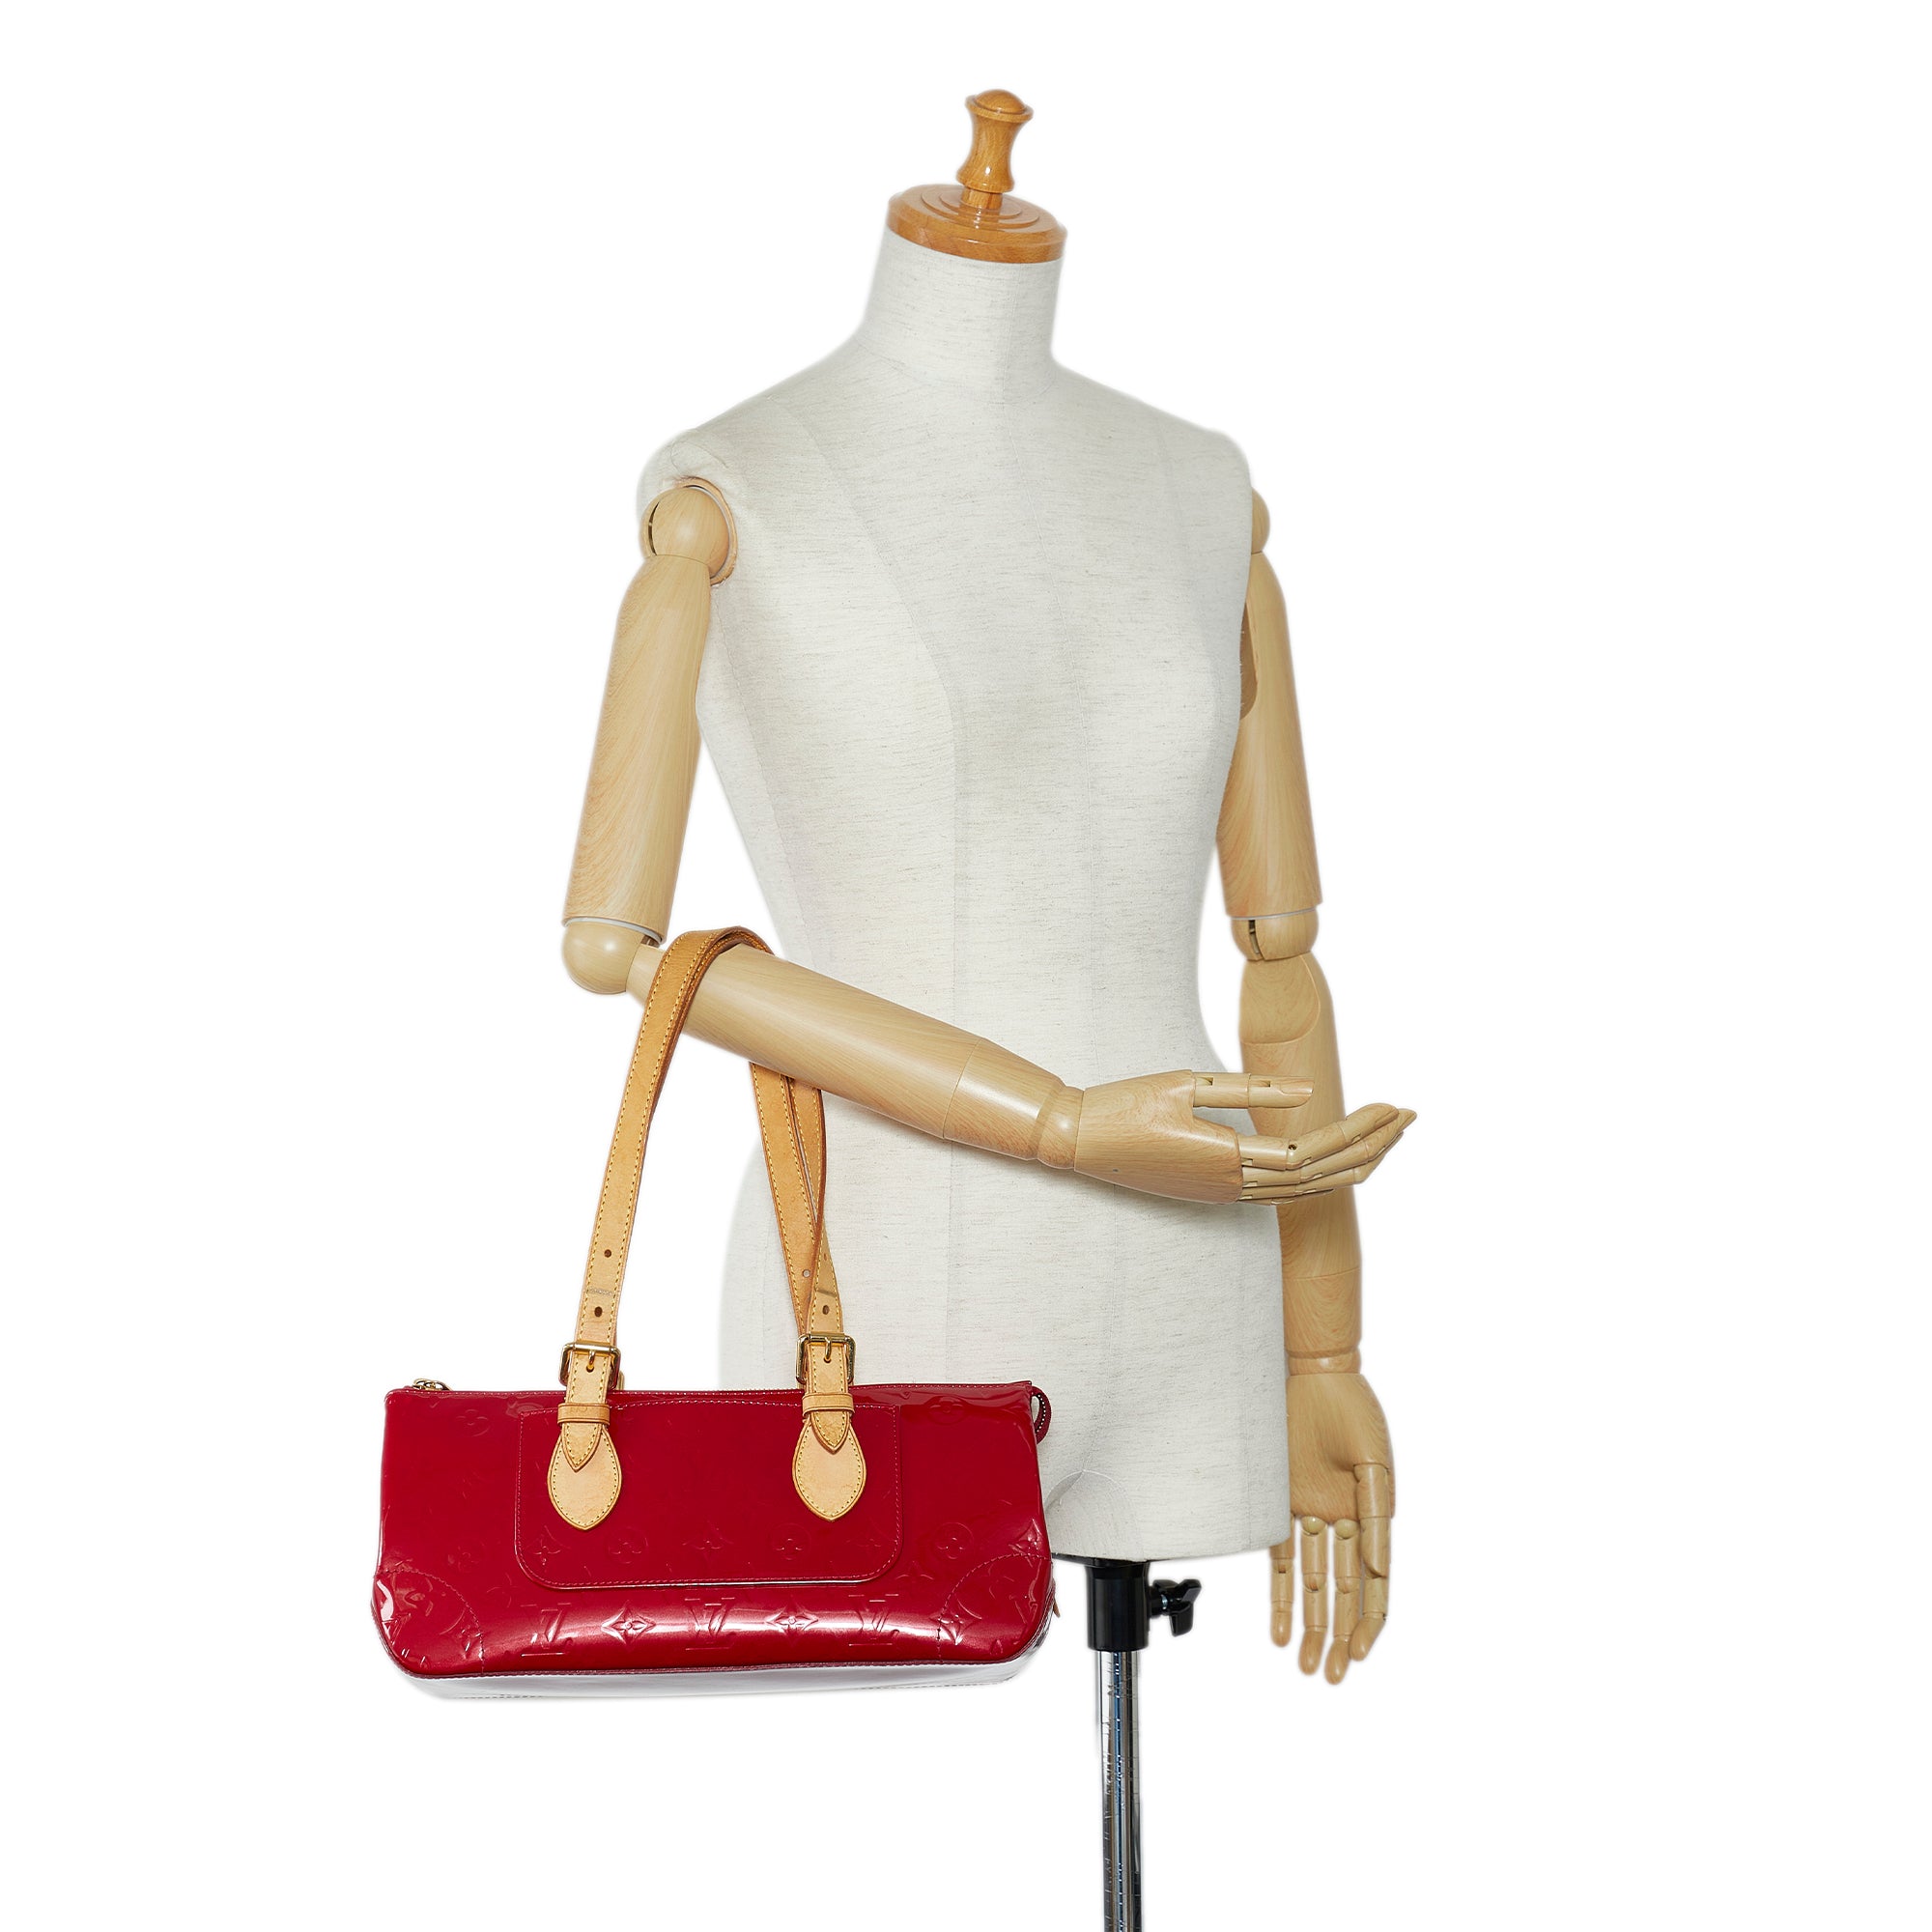 Louis Vuitton Authenticated Rosewood Handbag